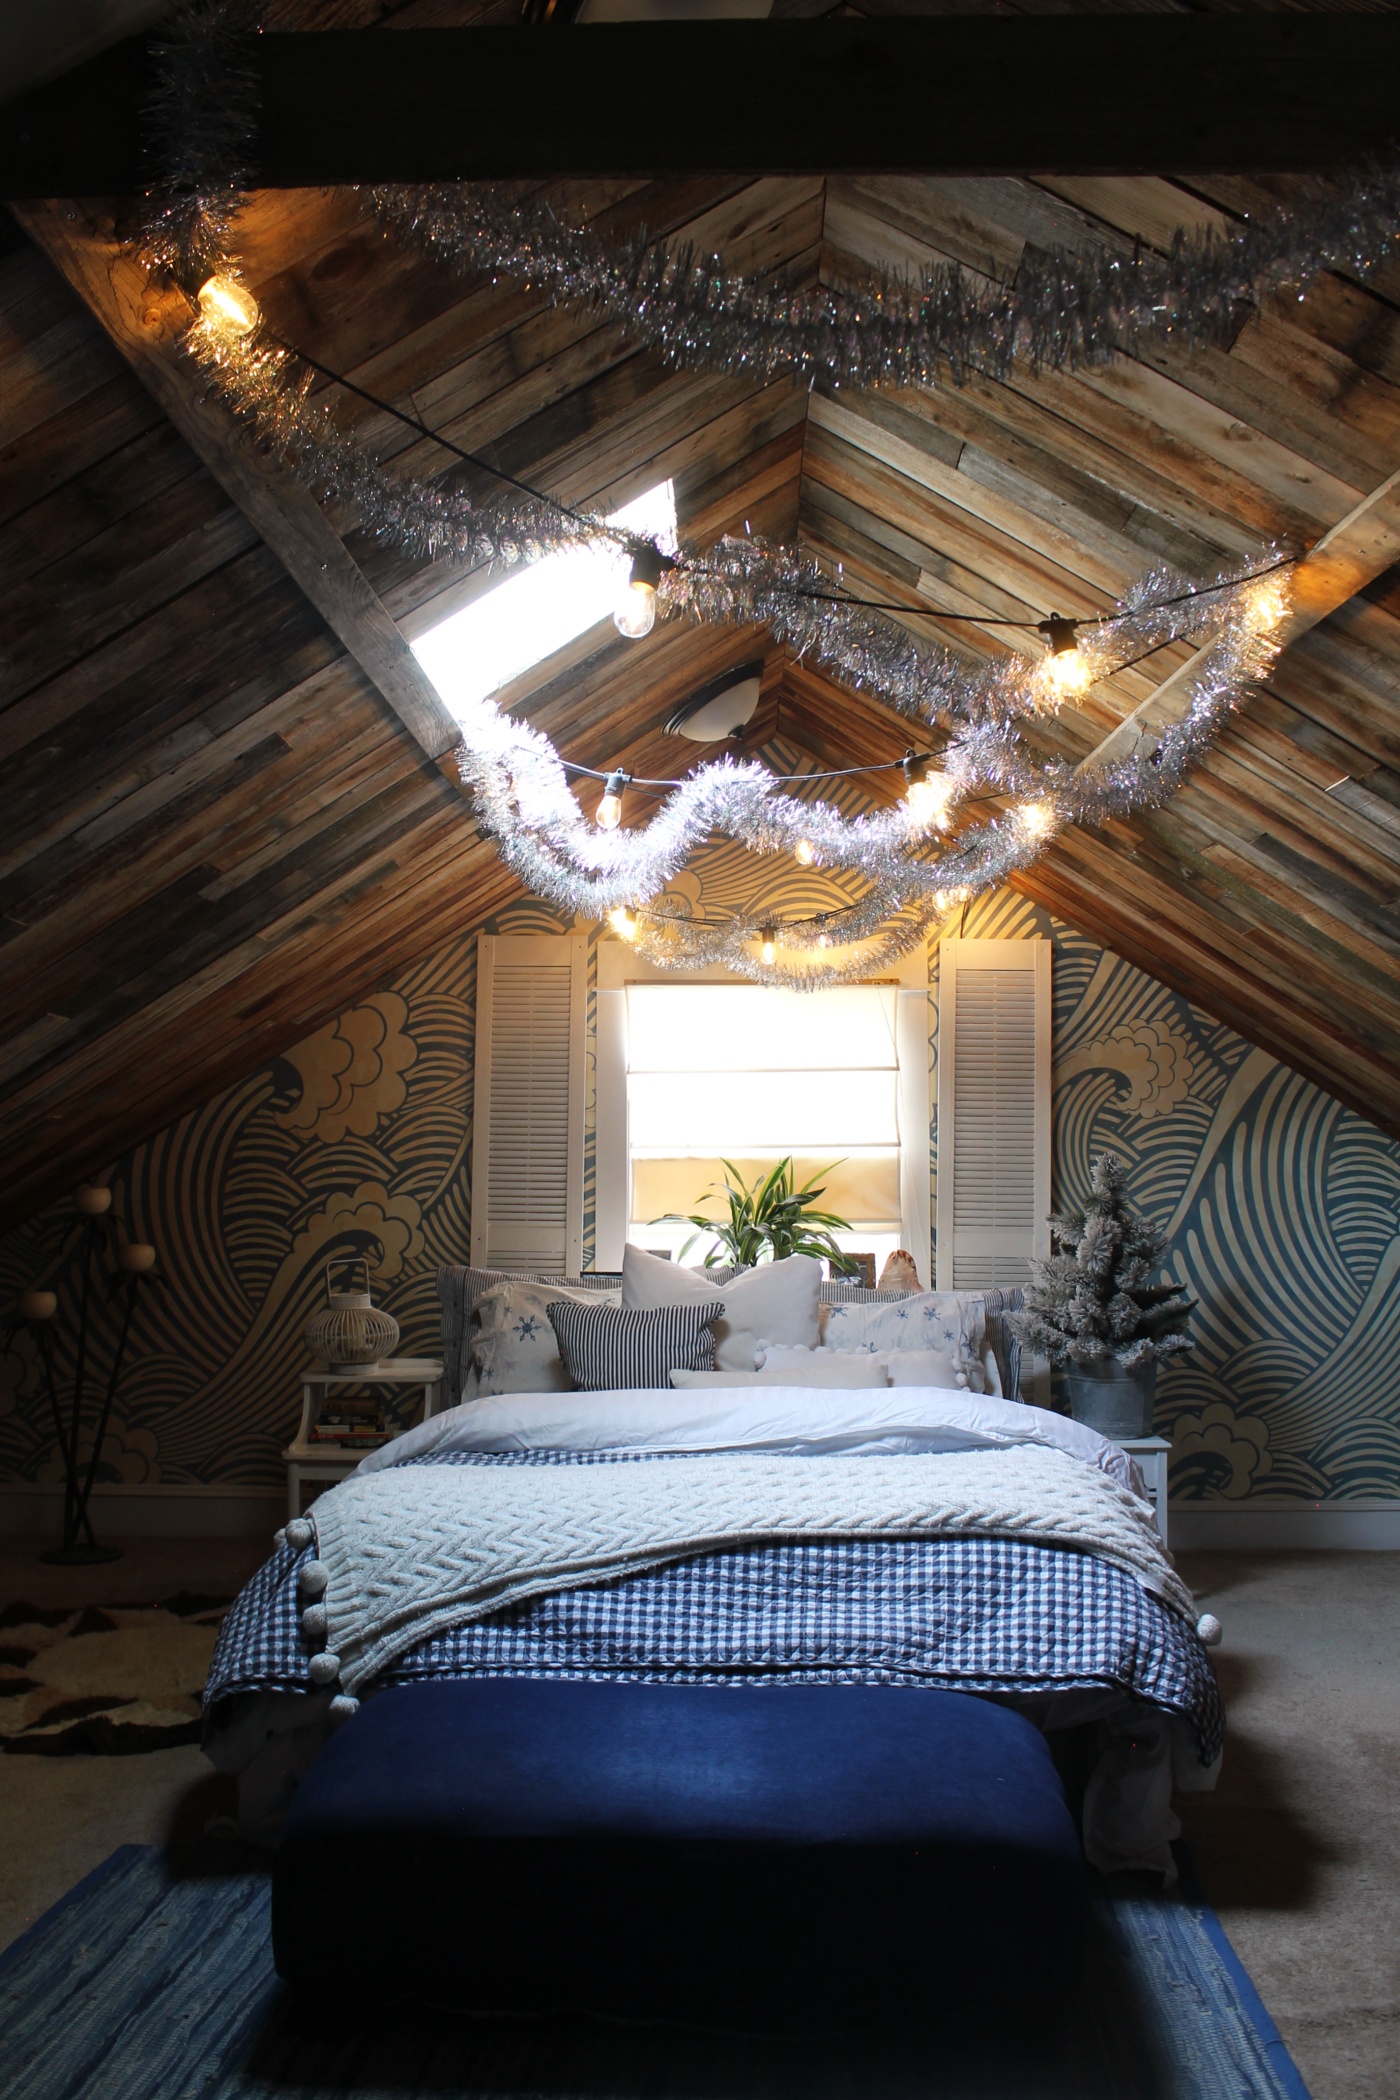 Bedroom fairy light ideas – 20 ways to style string lighting